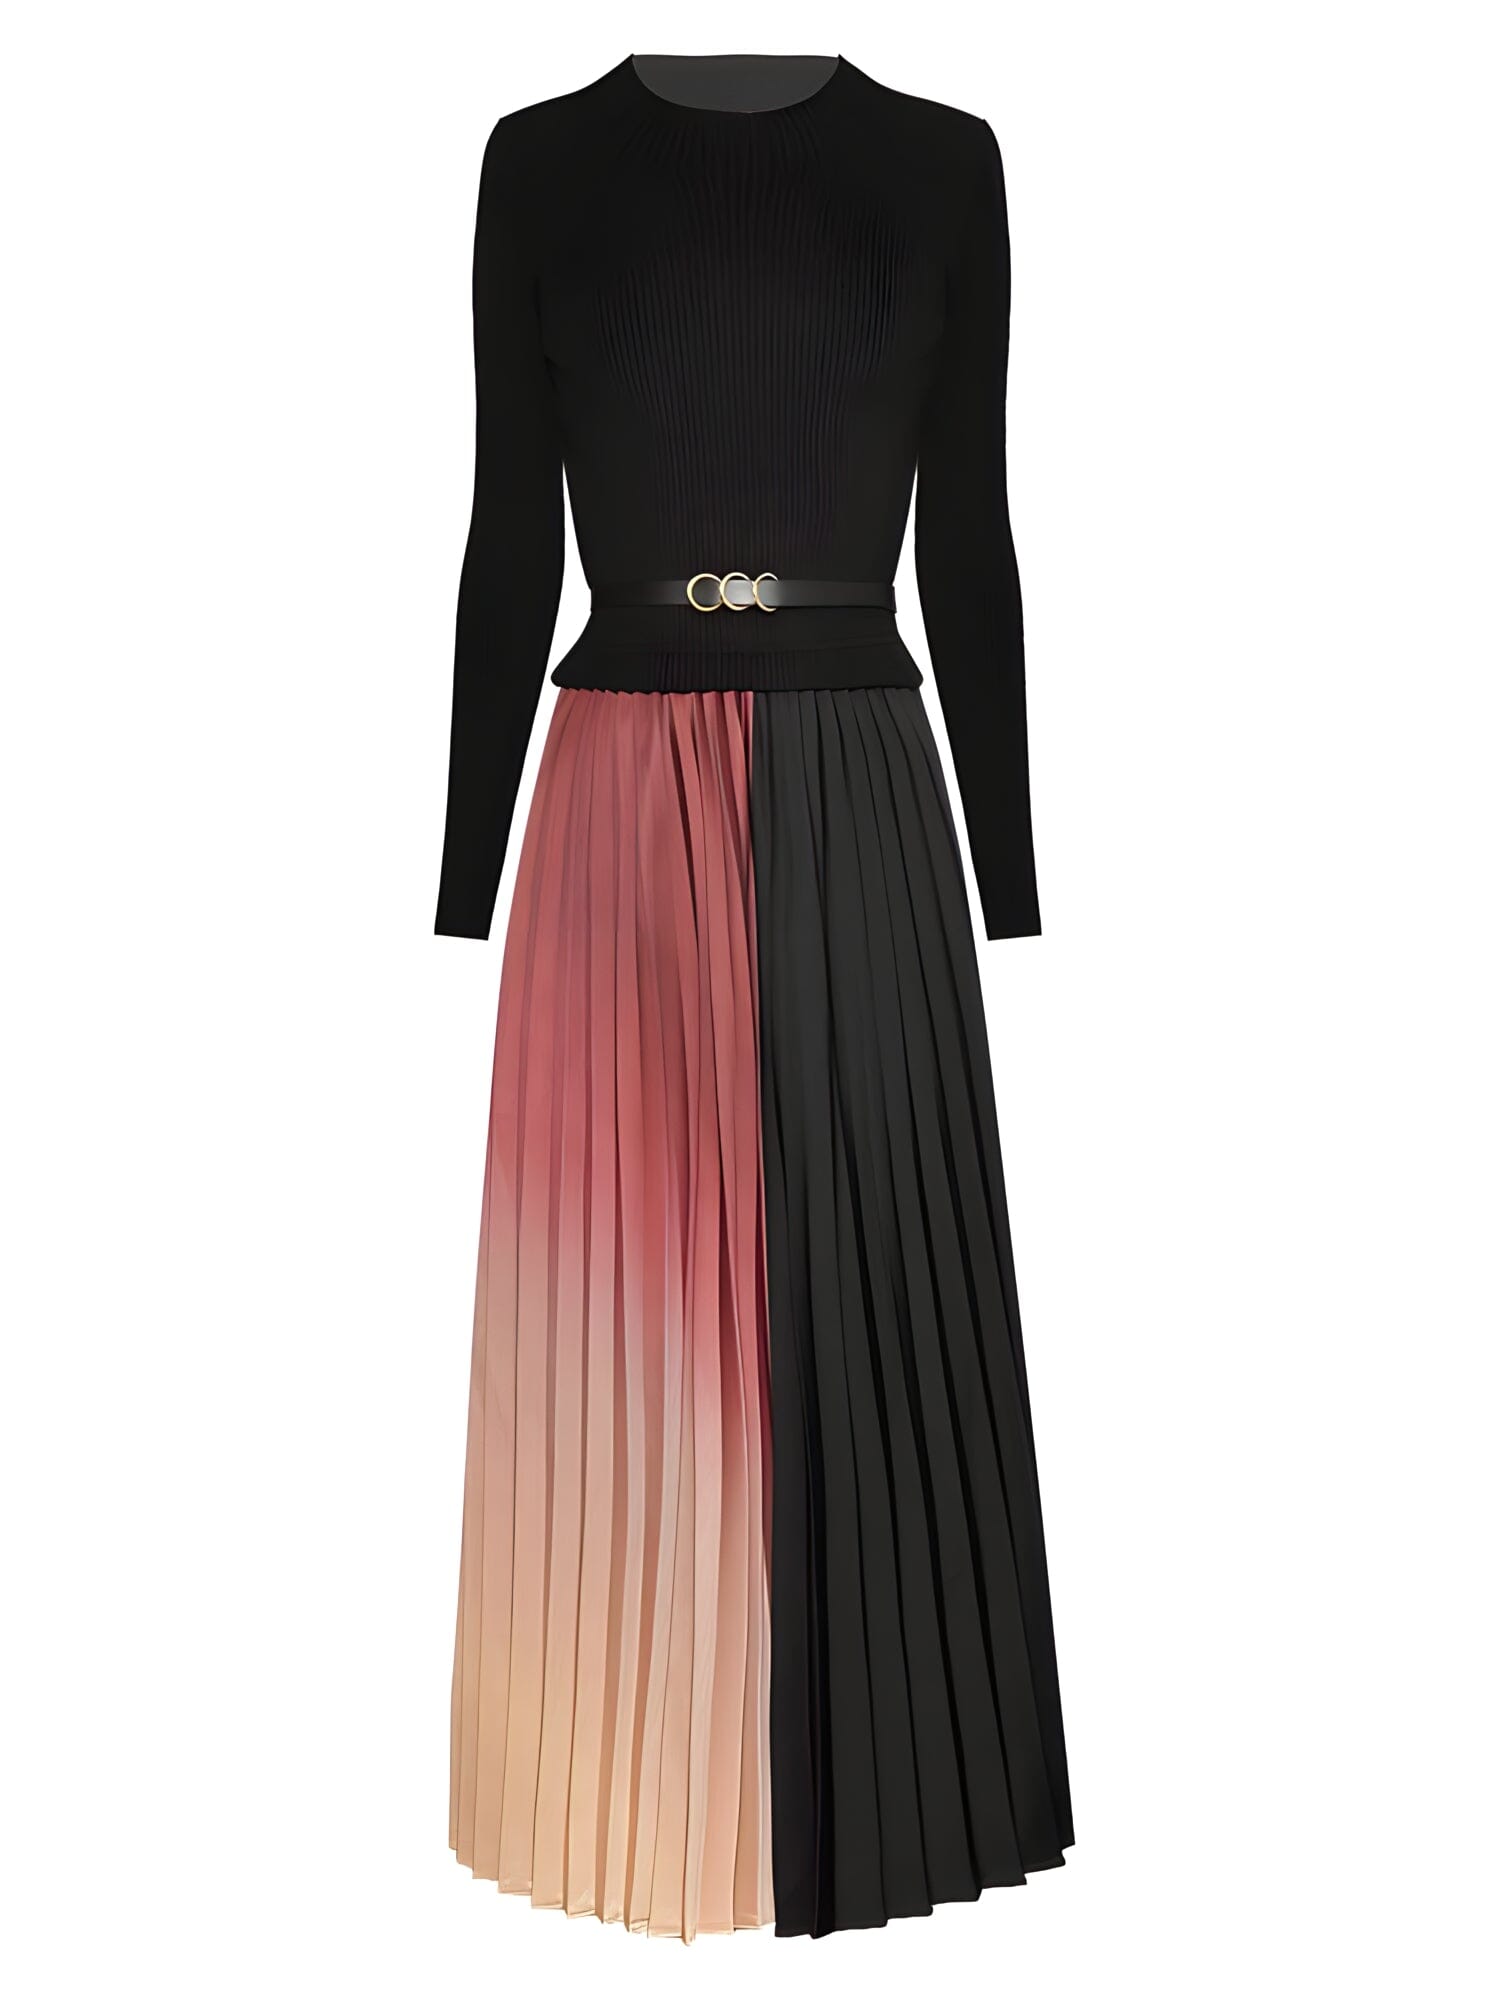 The Luna Long Sleeve Pleated Dress Shop5798684 Store S 